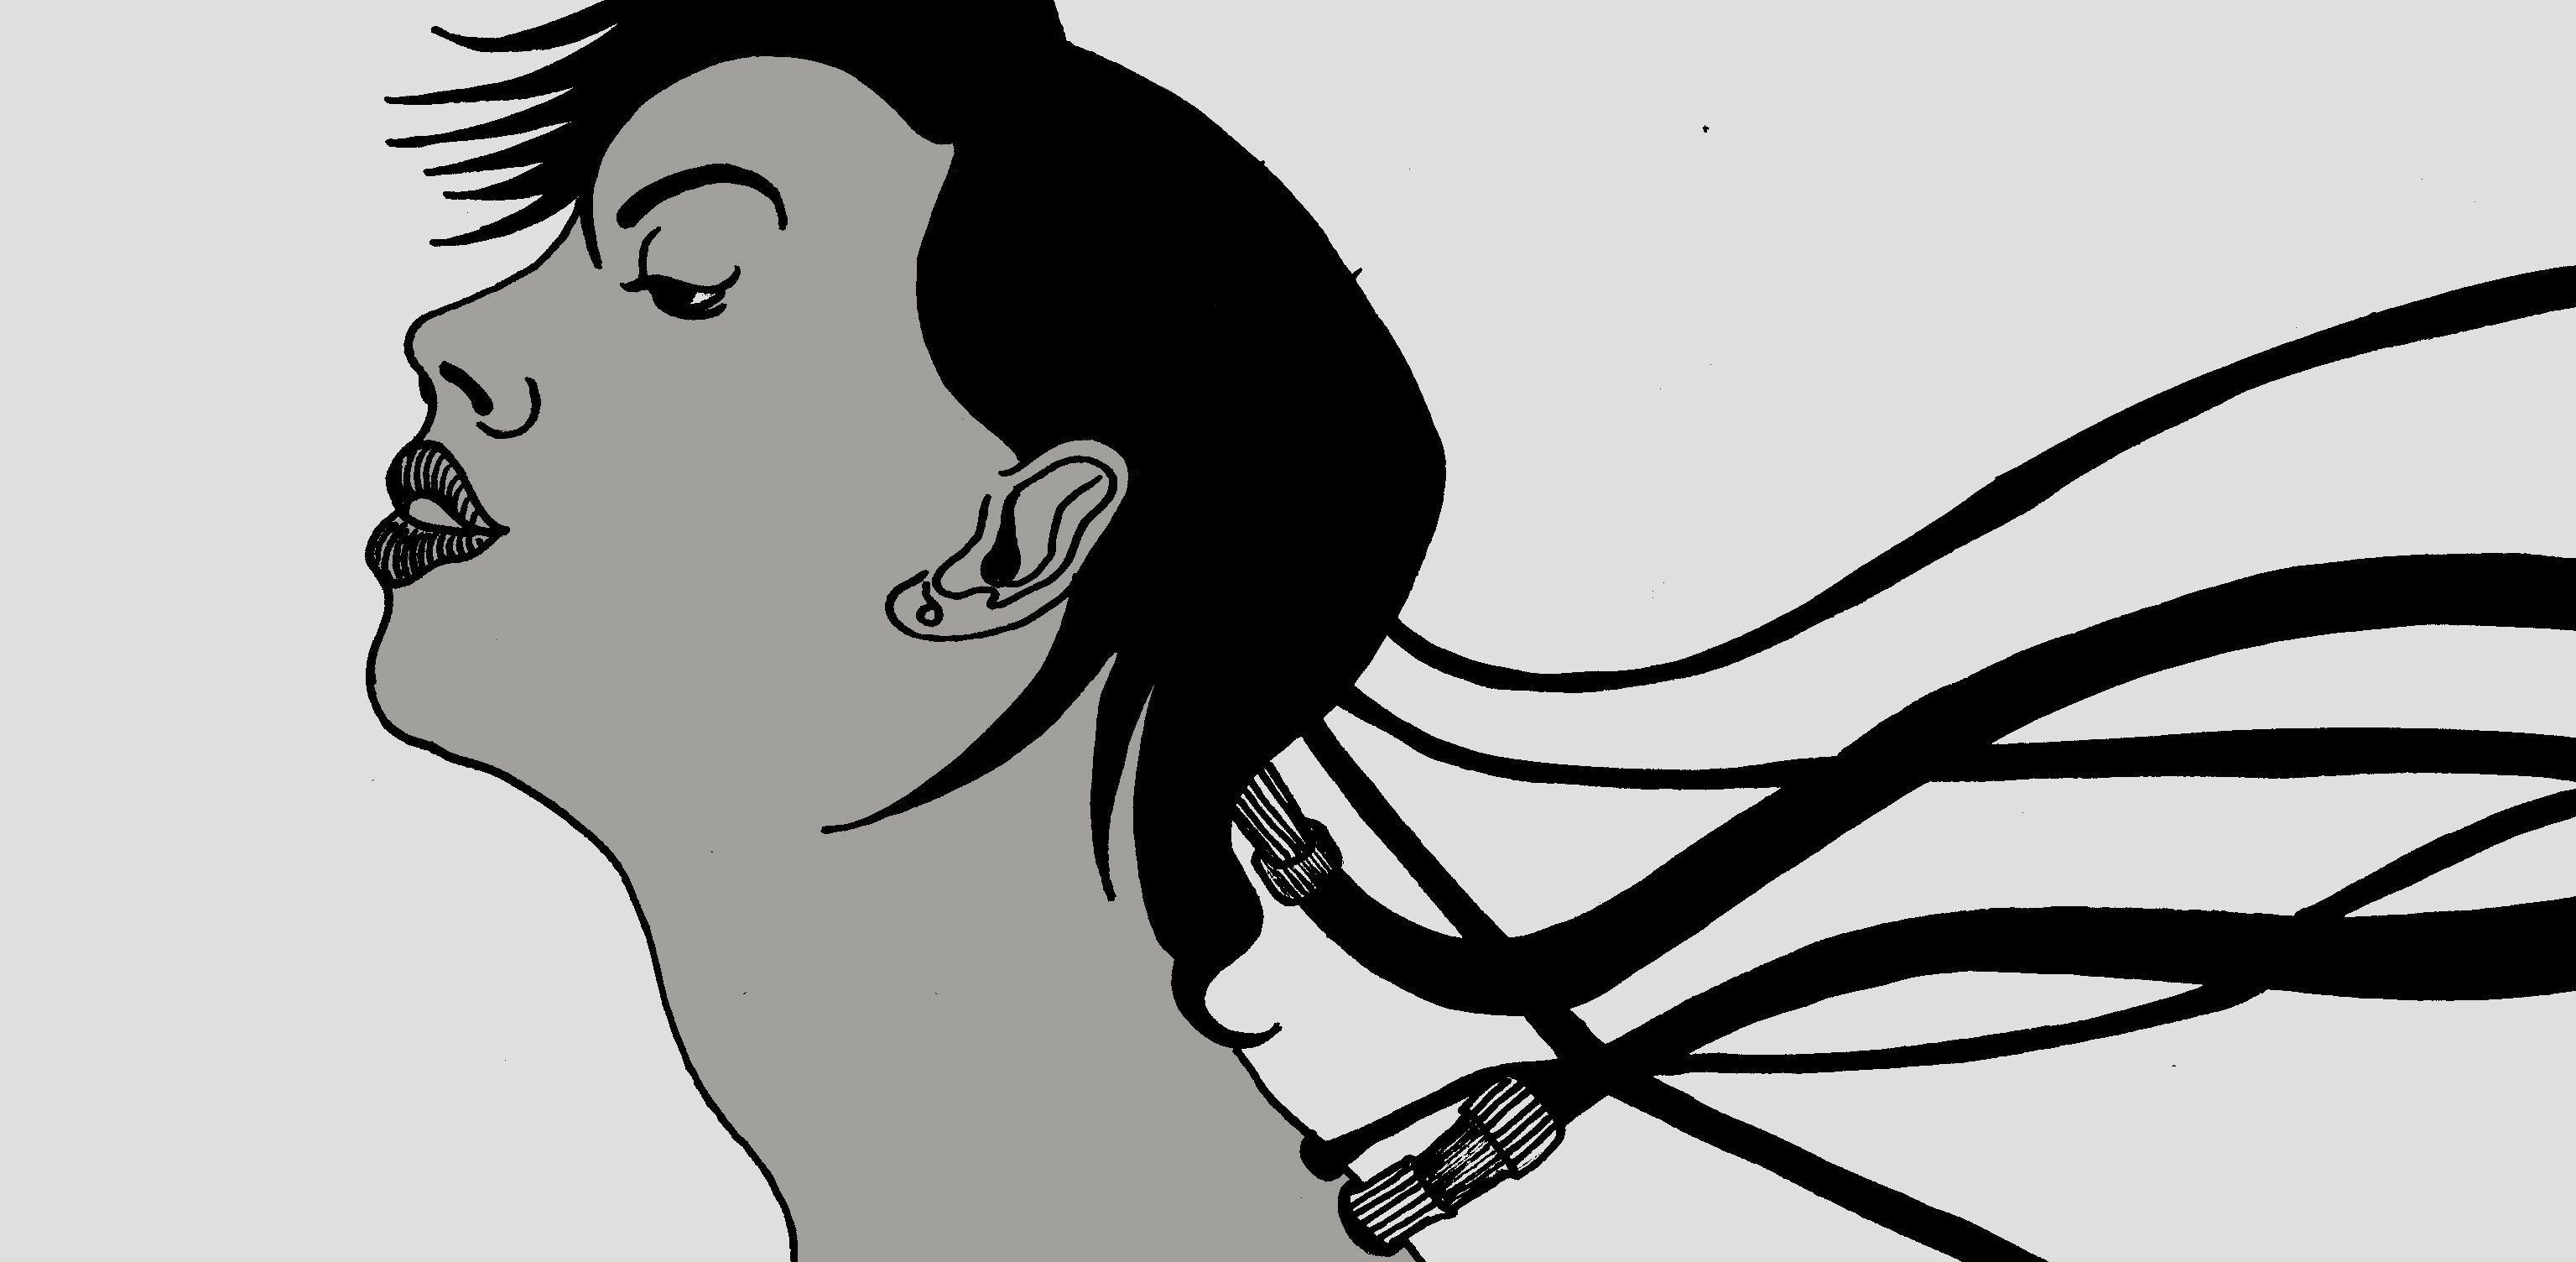 Cyberpunk not dead: Скарлетт Йоханссон мстит за маму в голливудской версии «Призрака в доспехах»